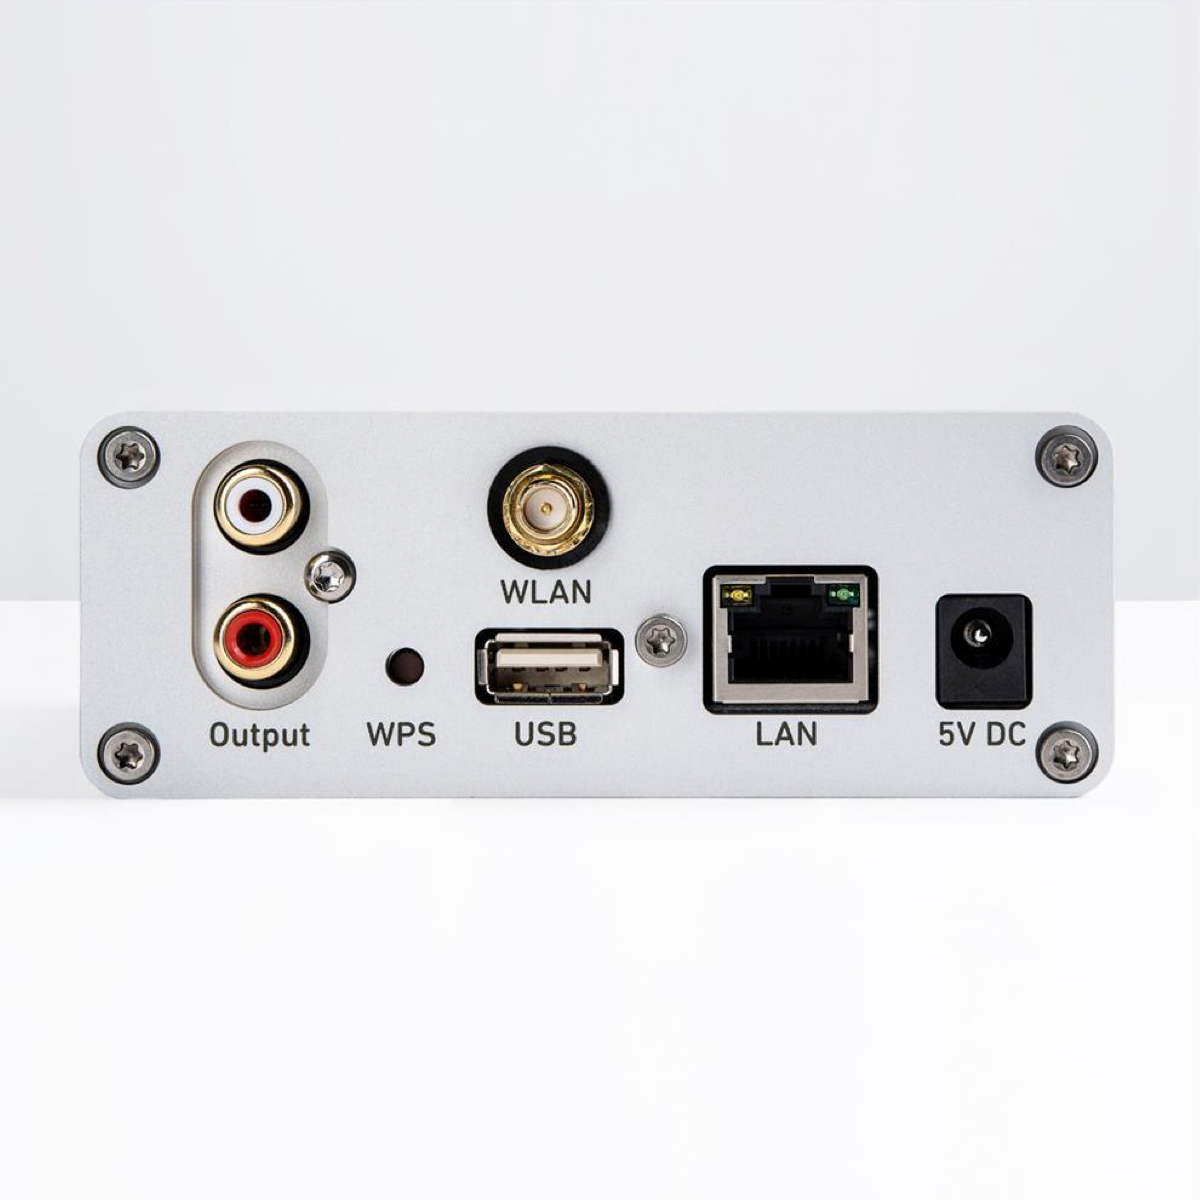 Lindemann Limetree Network II - Hi-Res Network Music Streamer DAC - AVStore